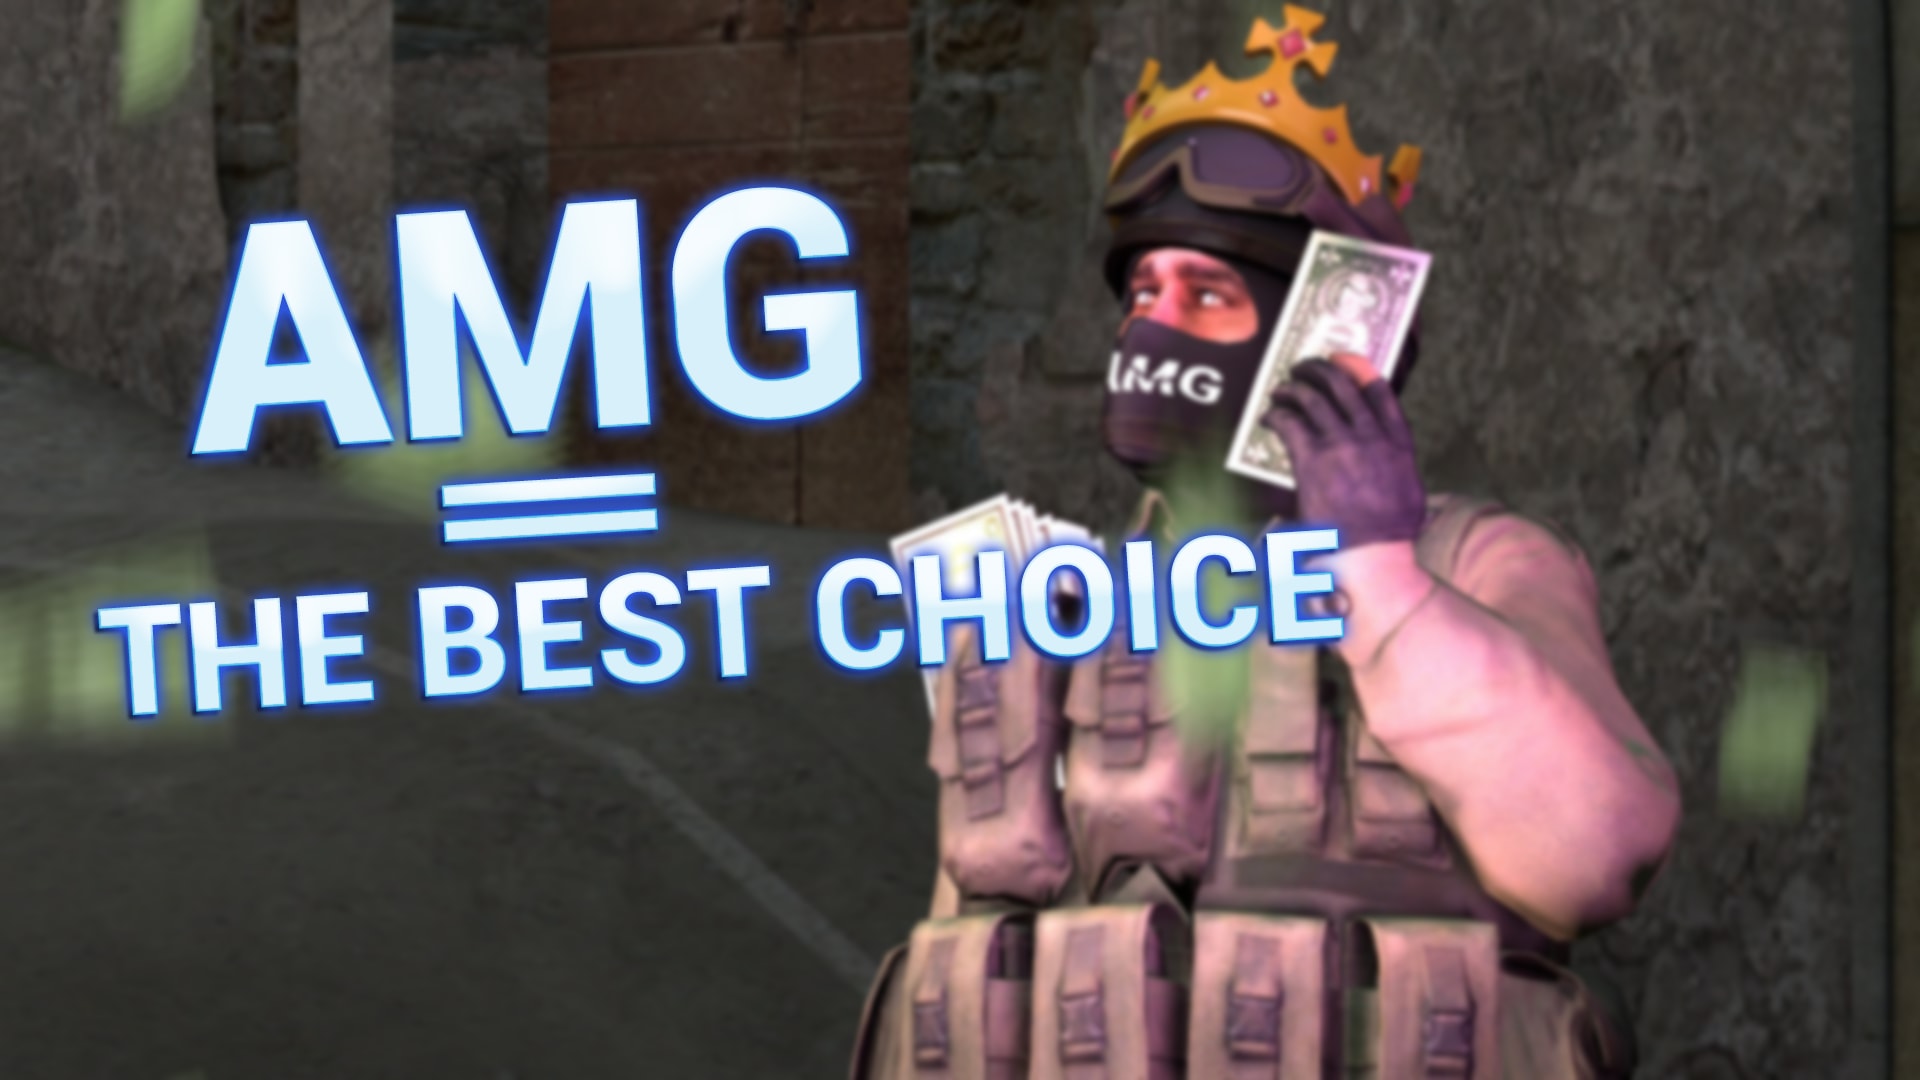 AMG = The Best Choice | Видео |